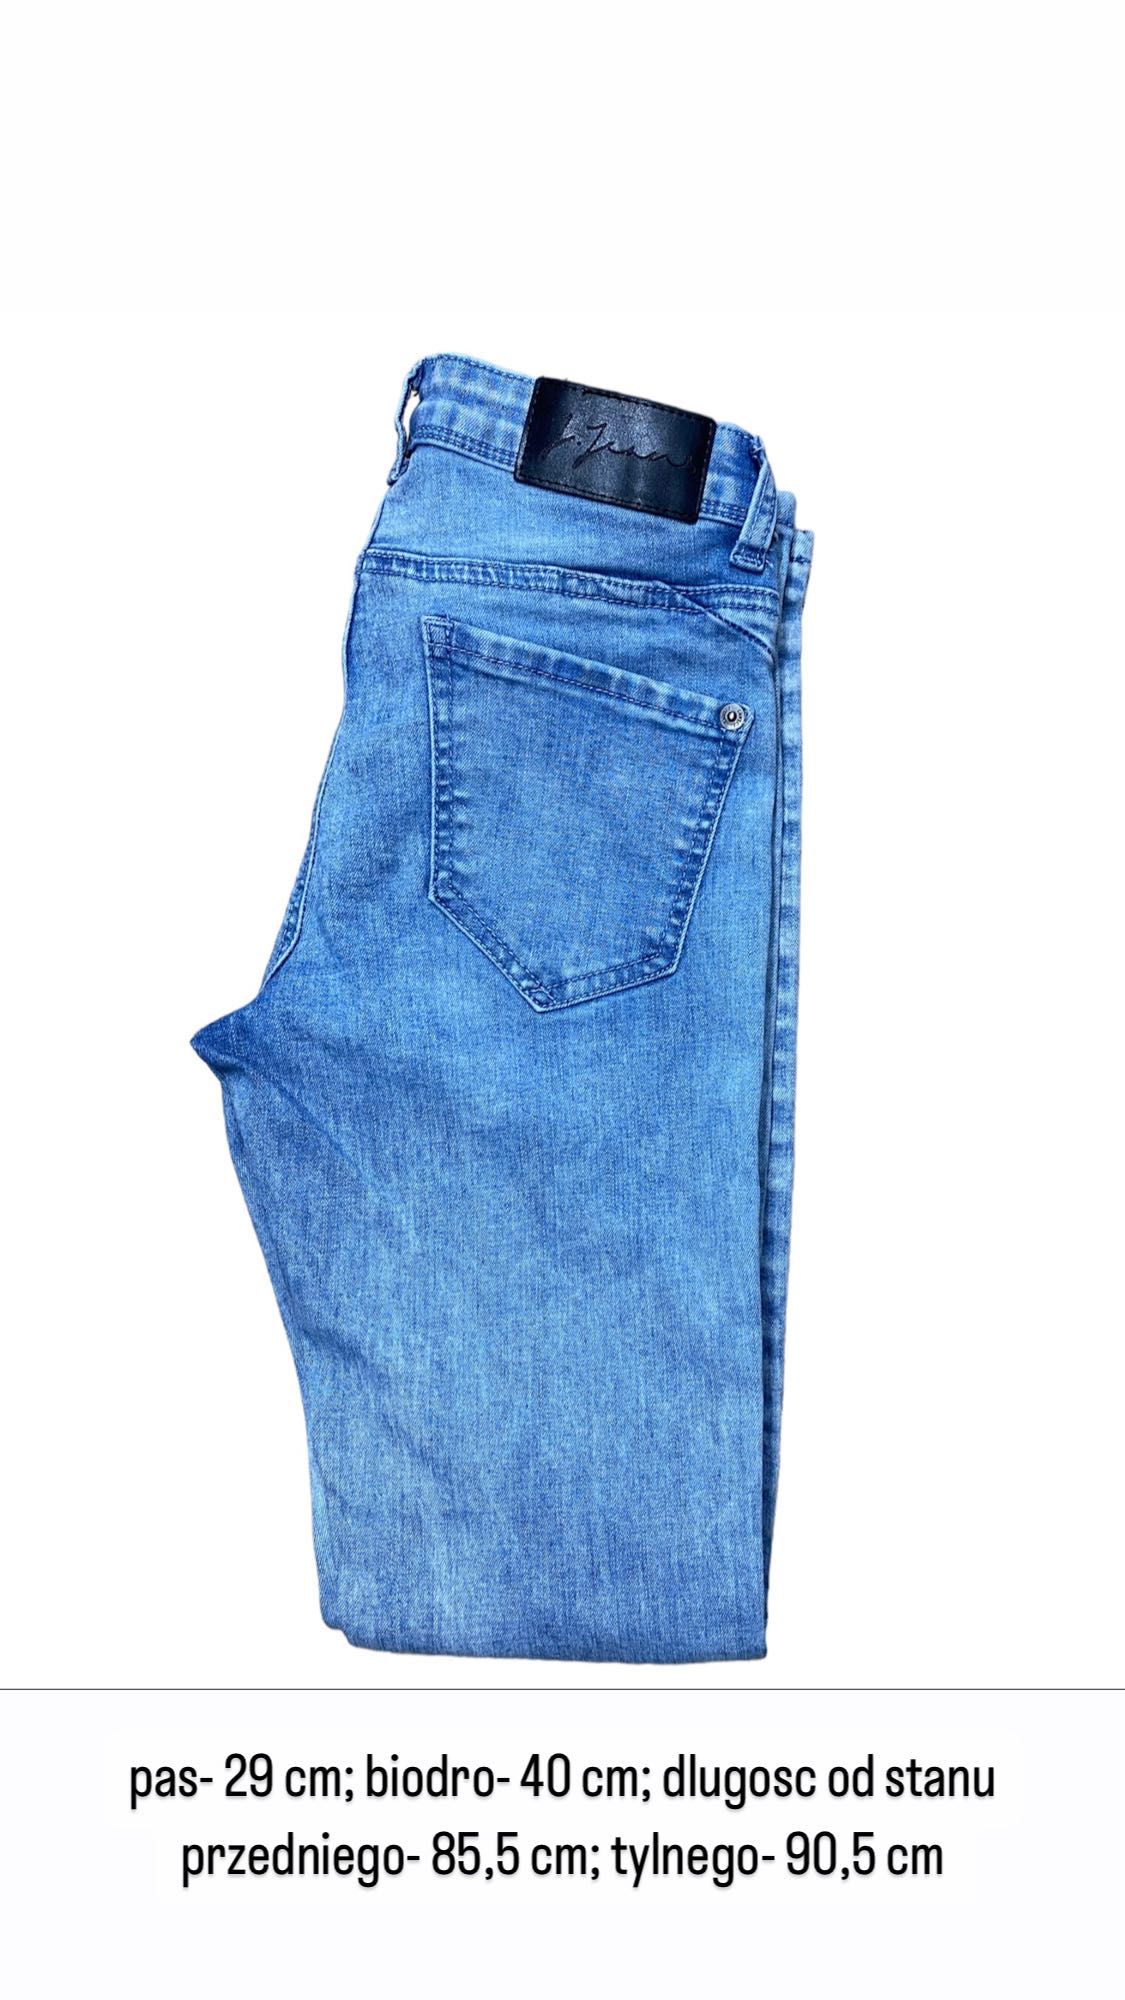 Jasne jeansy super slim Jennyfer XS 34 rurki dopasowane